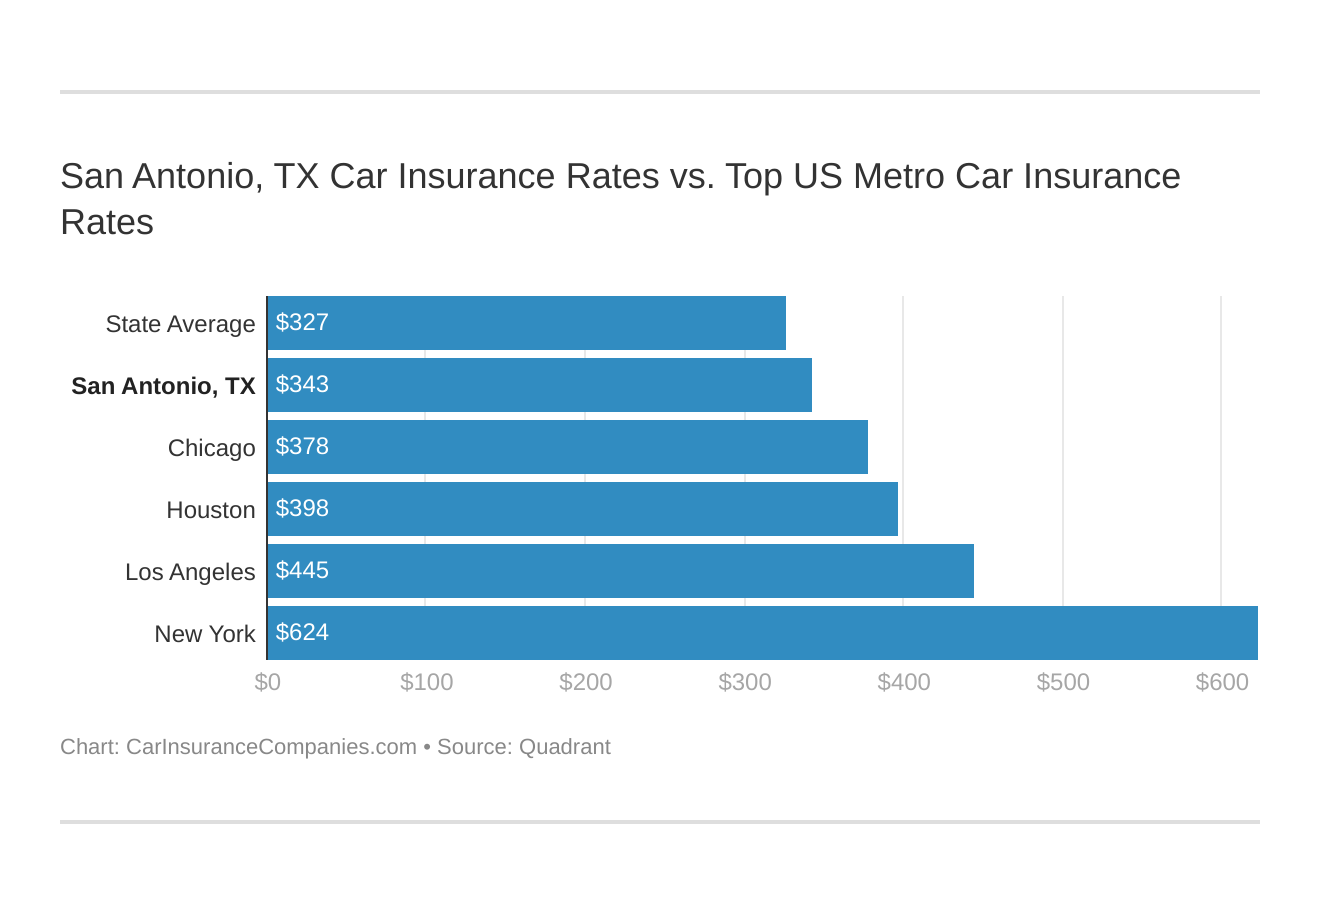 San Antonio, TX Car Insurance Rates vs. Top US Metro Car Insurance Rates